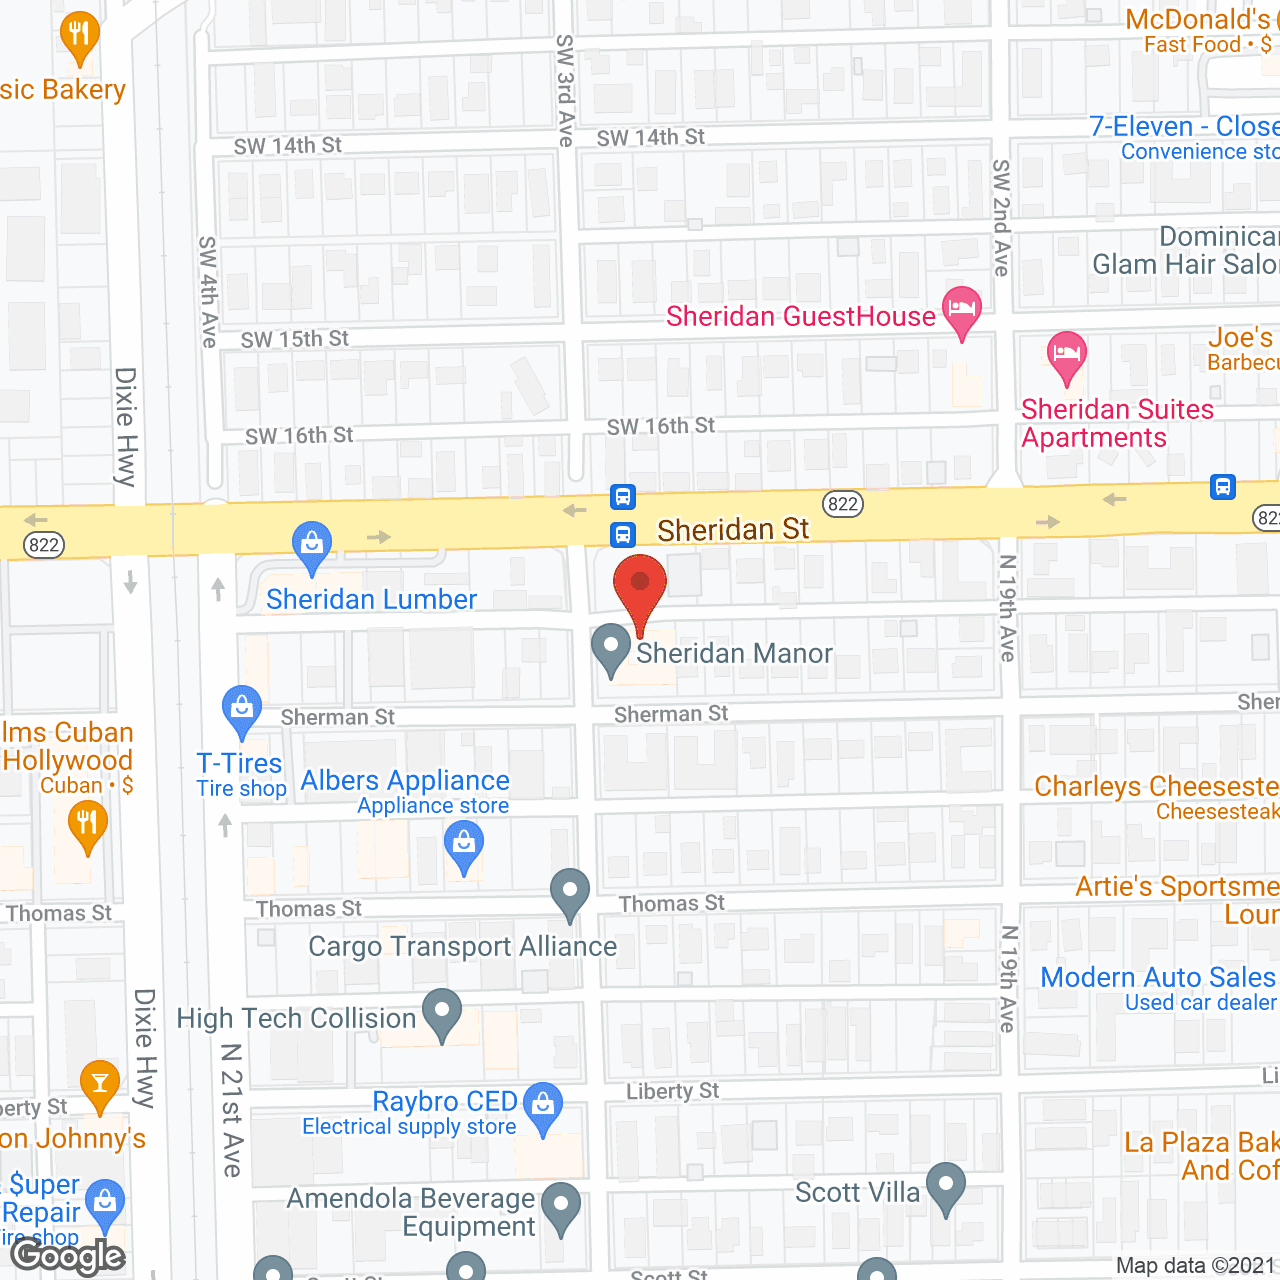 Sheridan Manor in google map